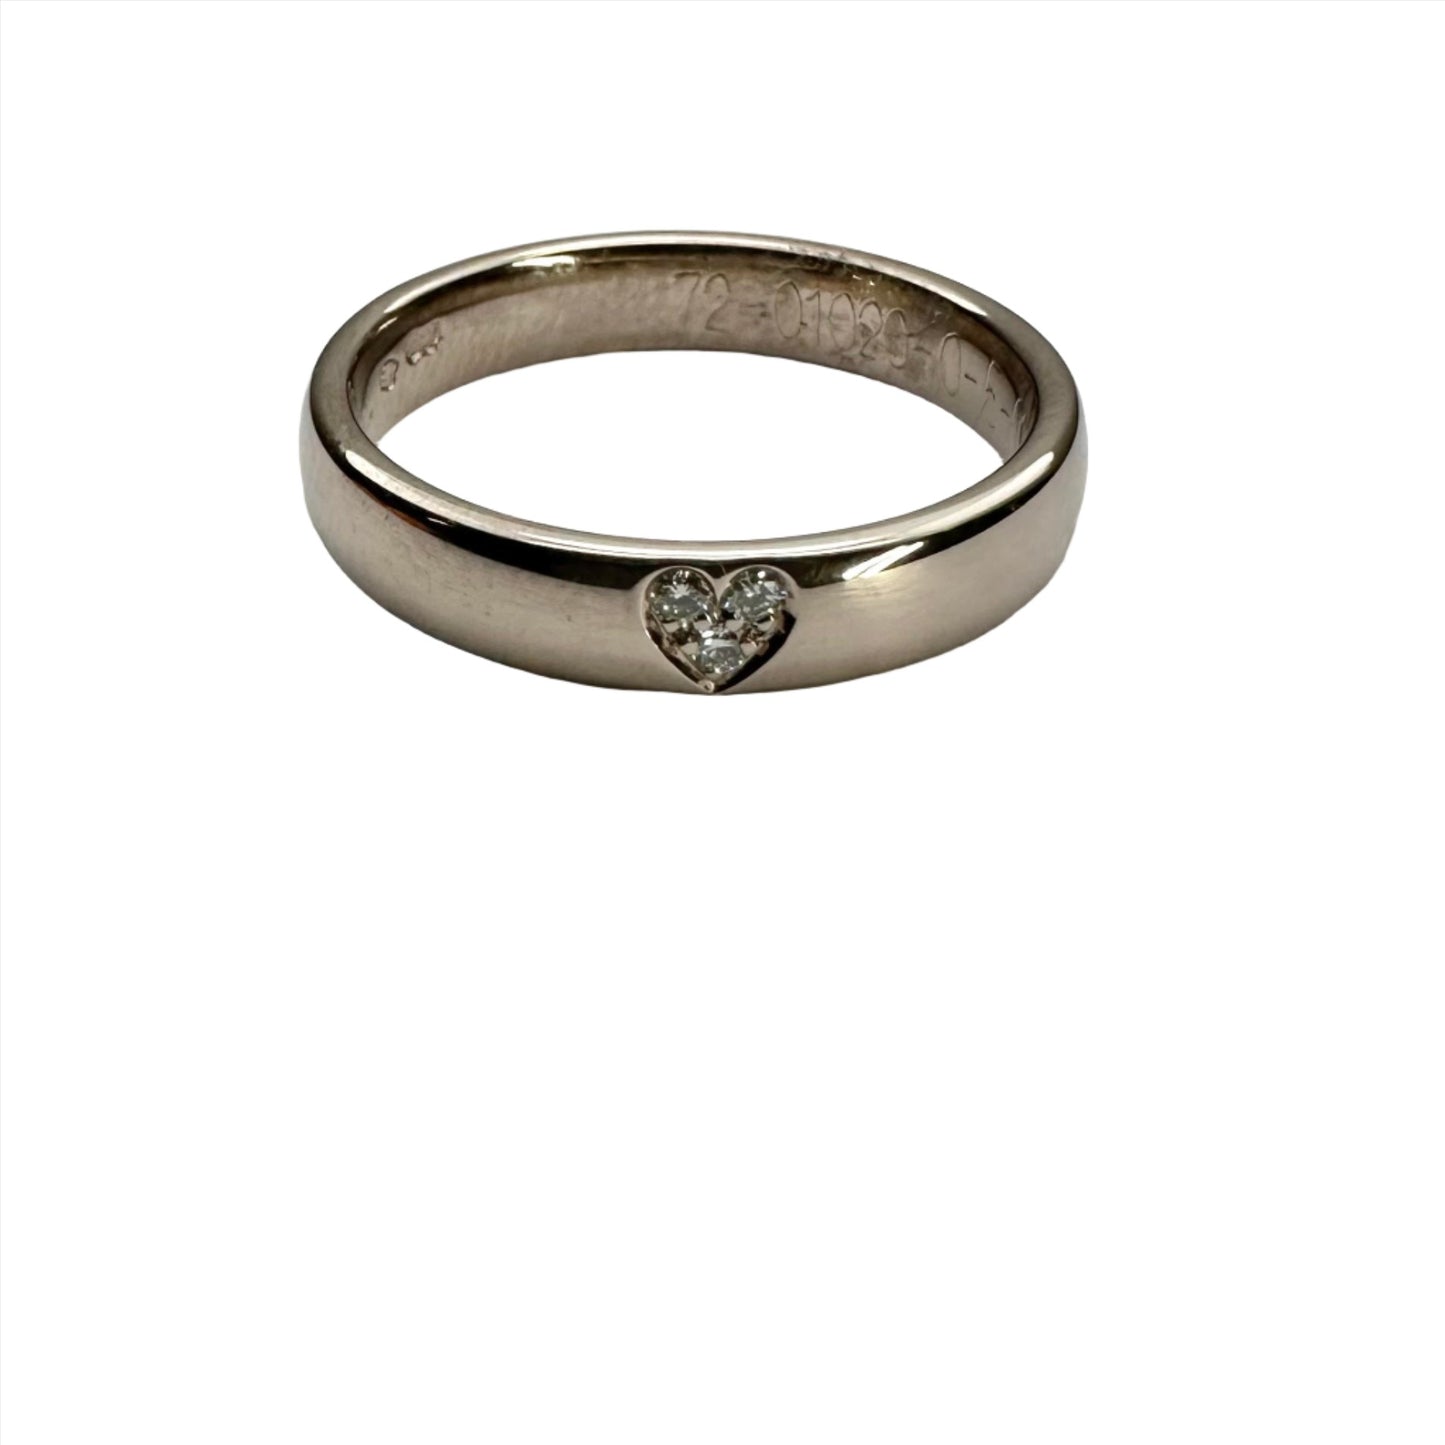 Furrer Jacot 18ct white gold 3.5mm diamond set wedding band - 0.04ct.